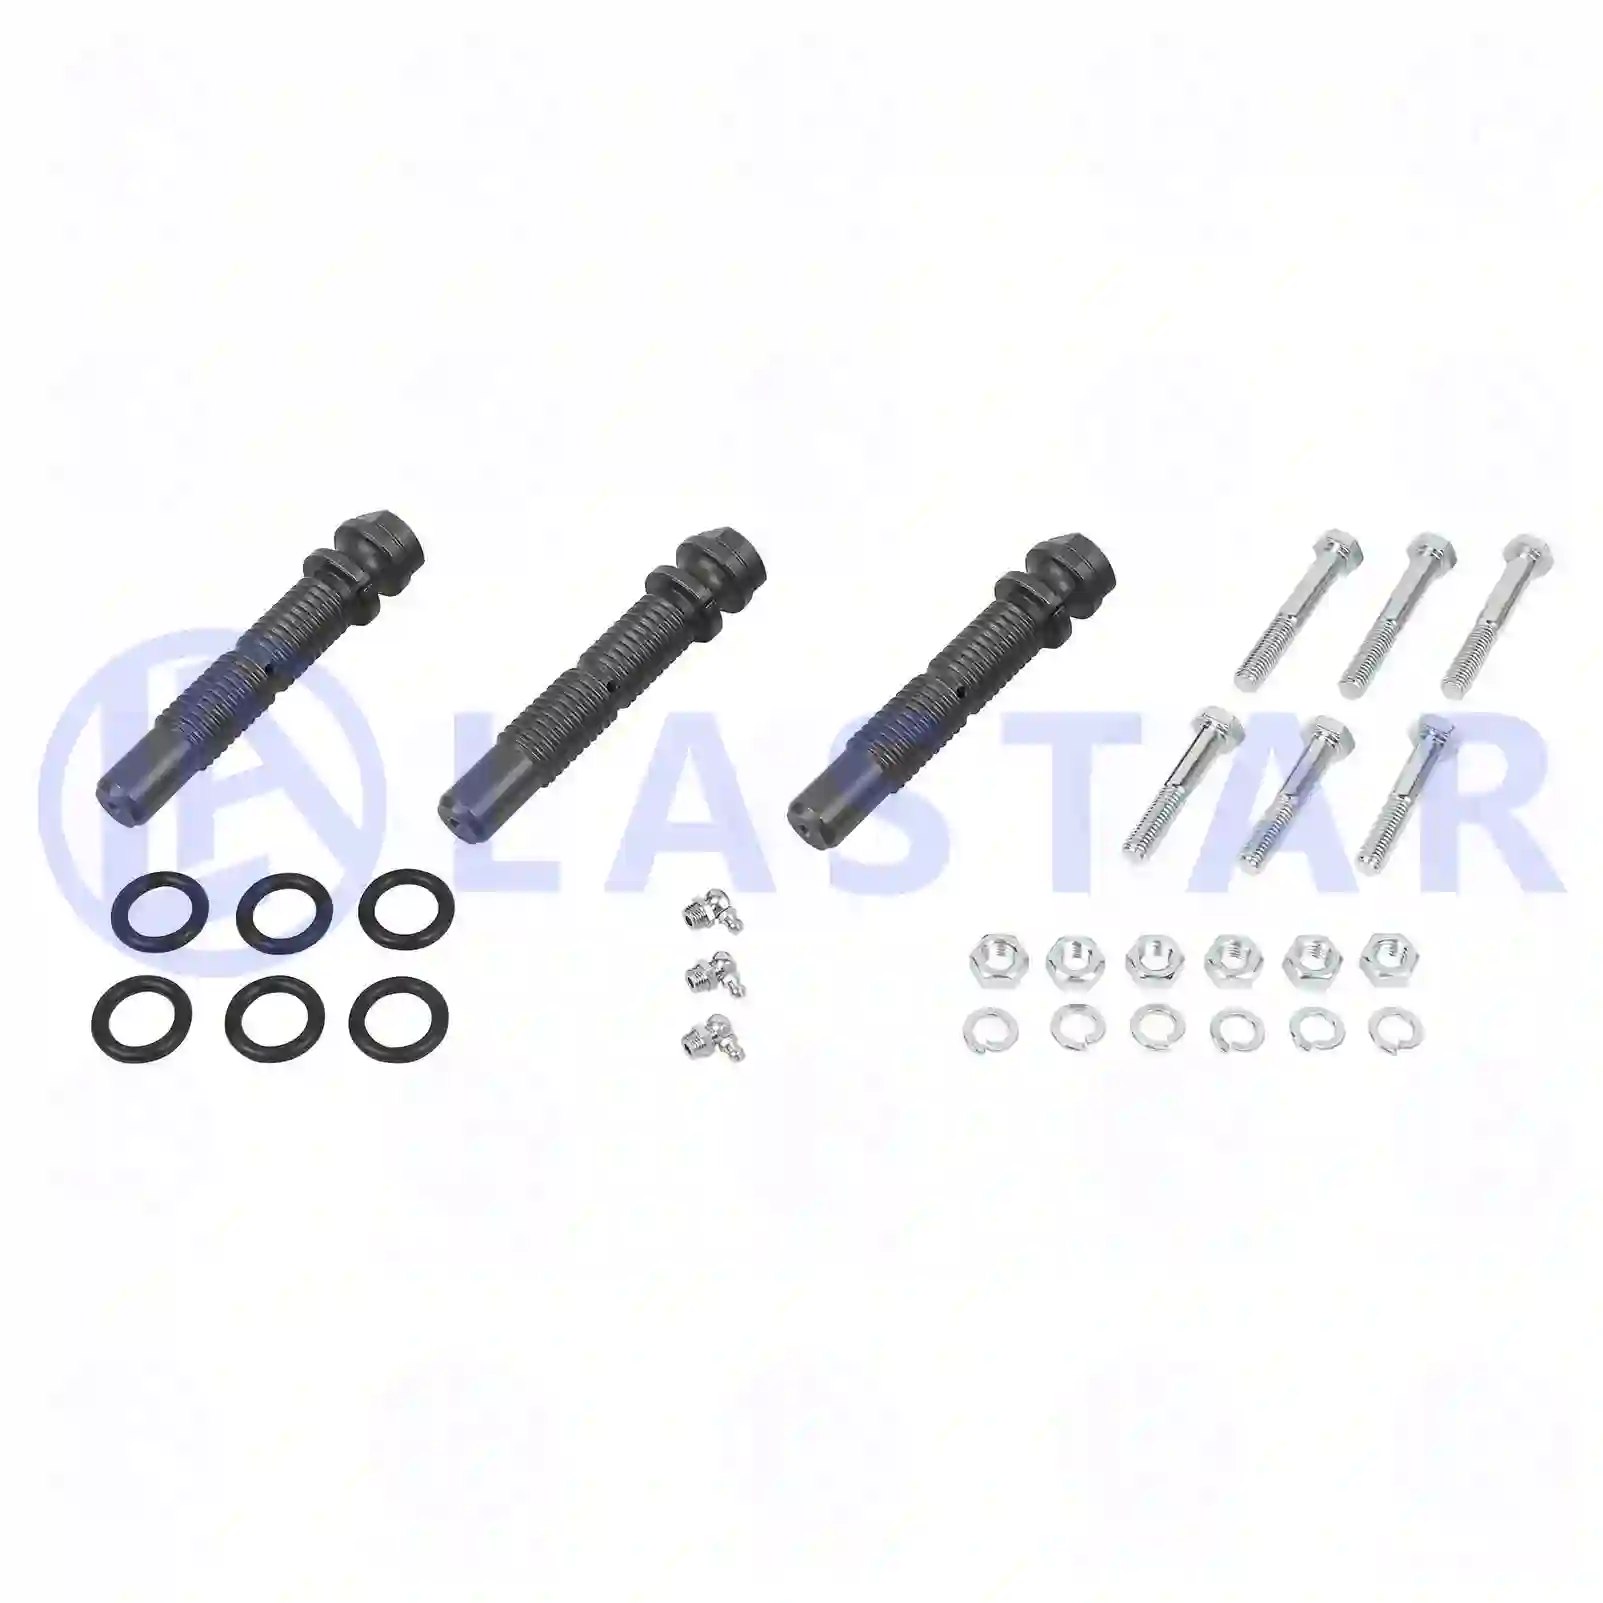  Spring bolt kit || Lastar Spare Part | Truck Spare Parts, Auotomotive Spare Parts